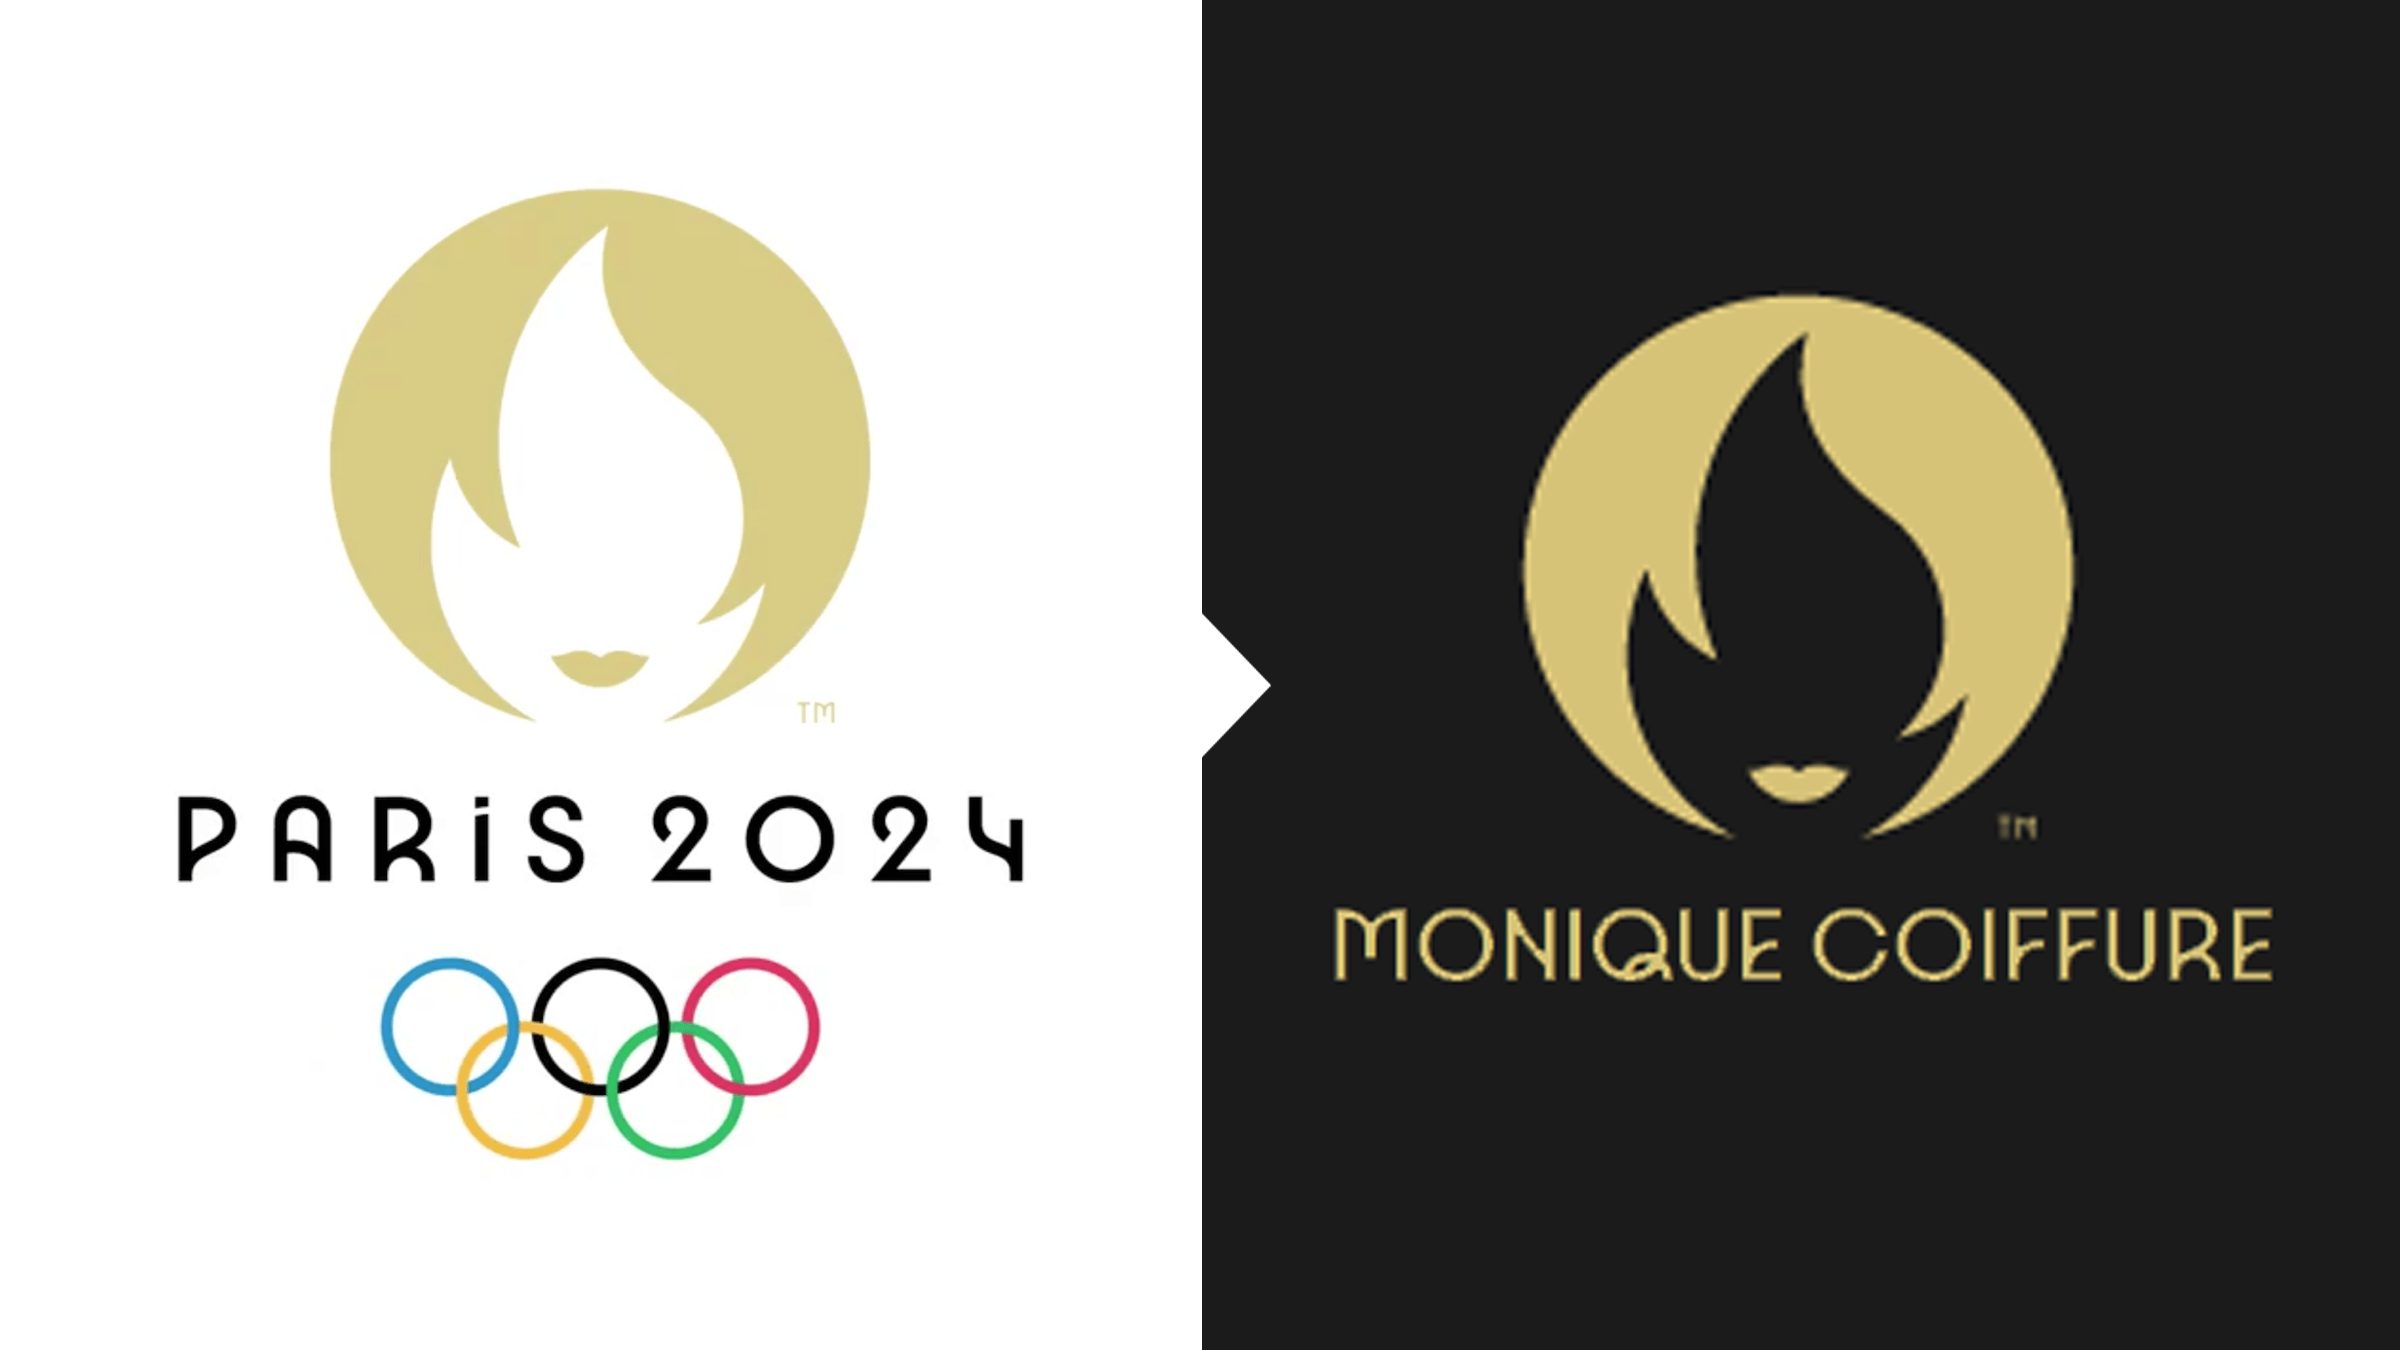 Лого 2024 года. Логотип 2024. Париж 2024 логотип. Модные логотипы 2024. Paris 2024 Olympics logo.